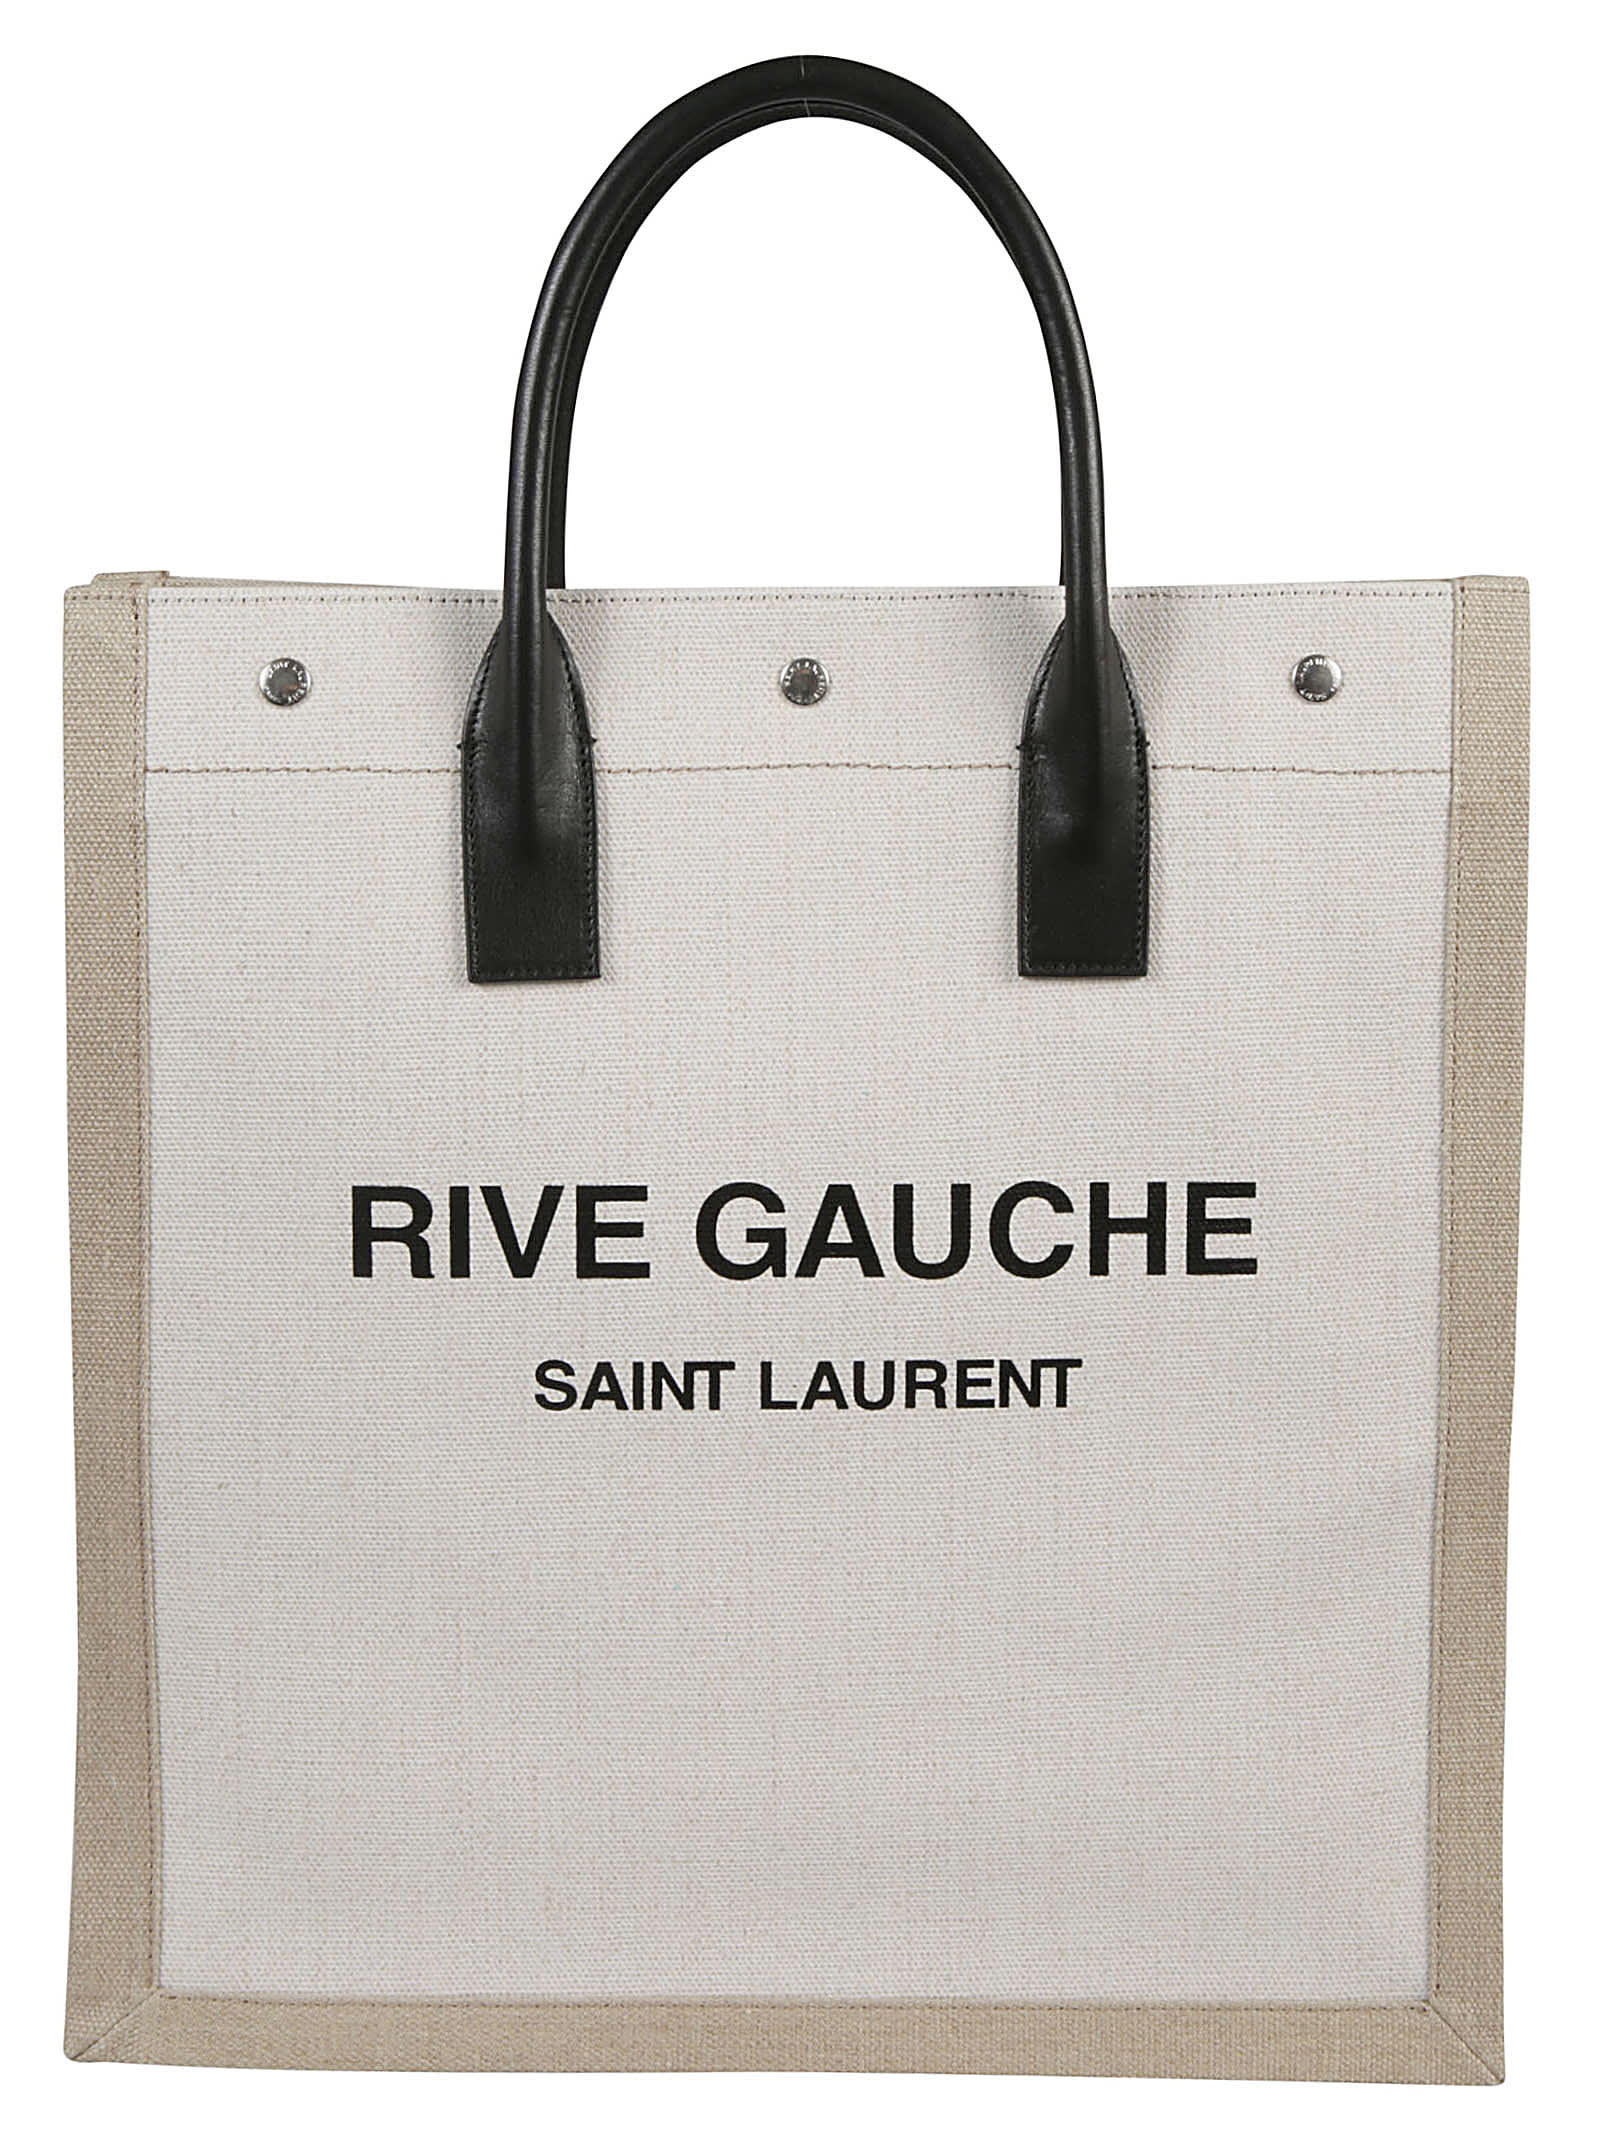 Saint Laurent Rive Gauche Tote In White/black